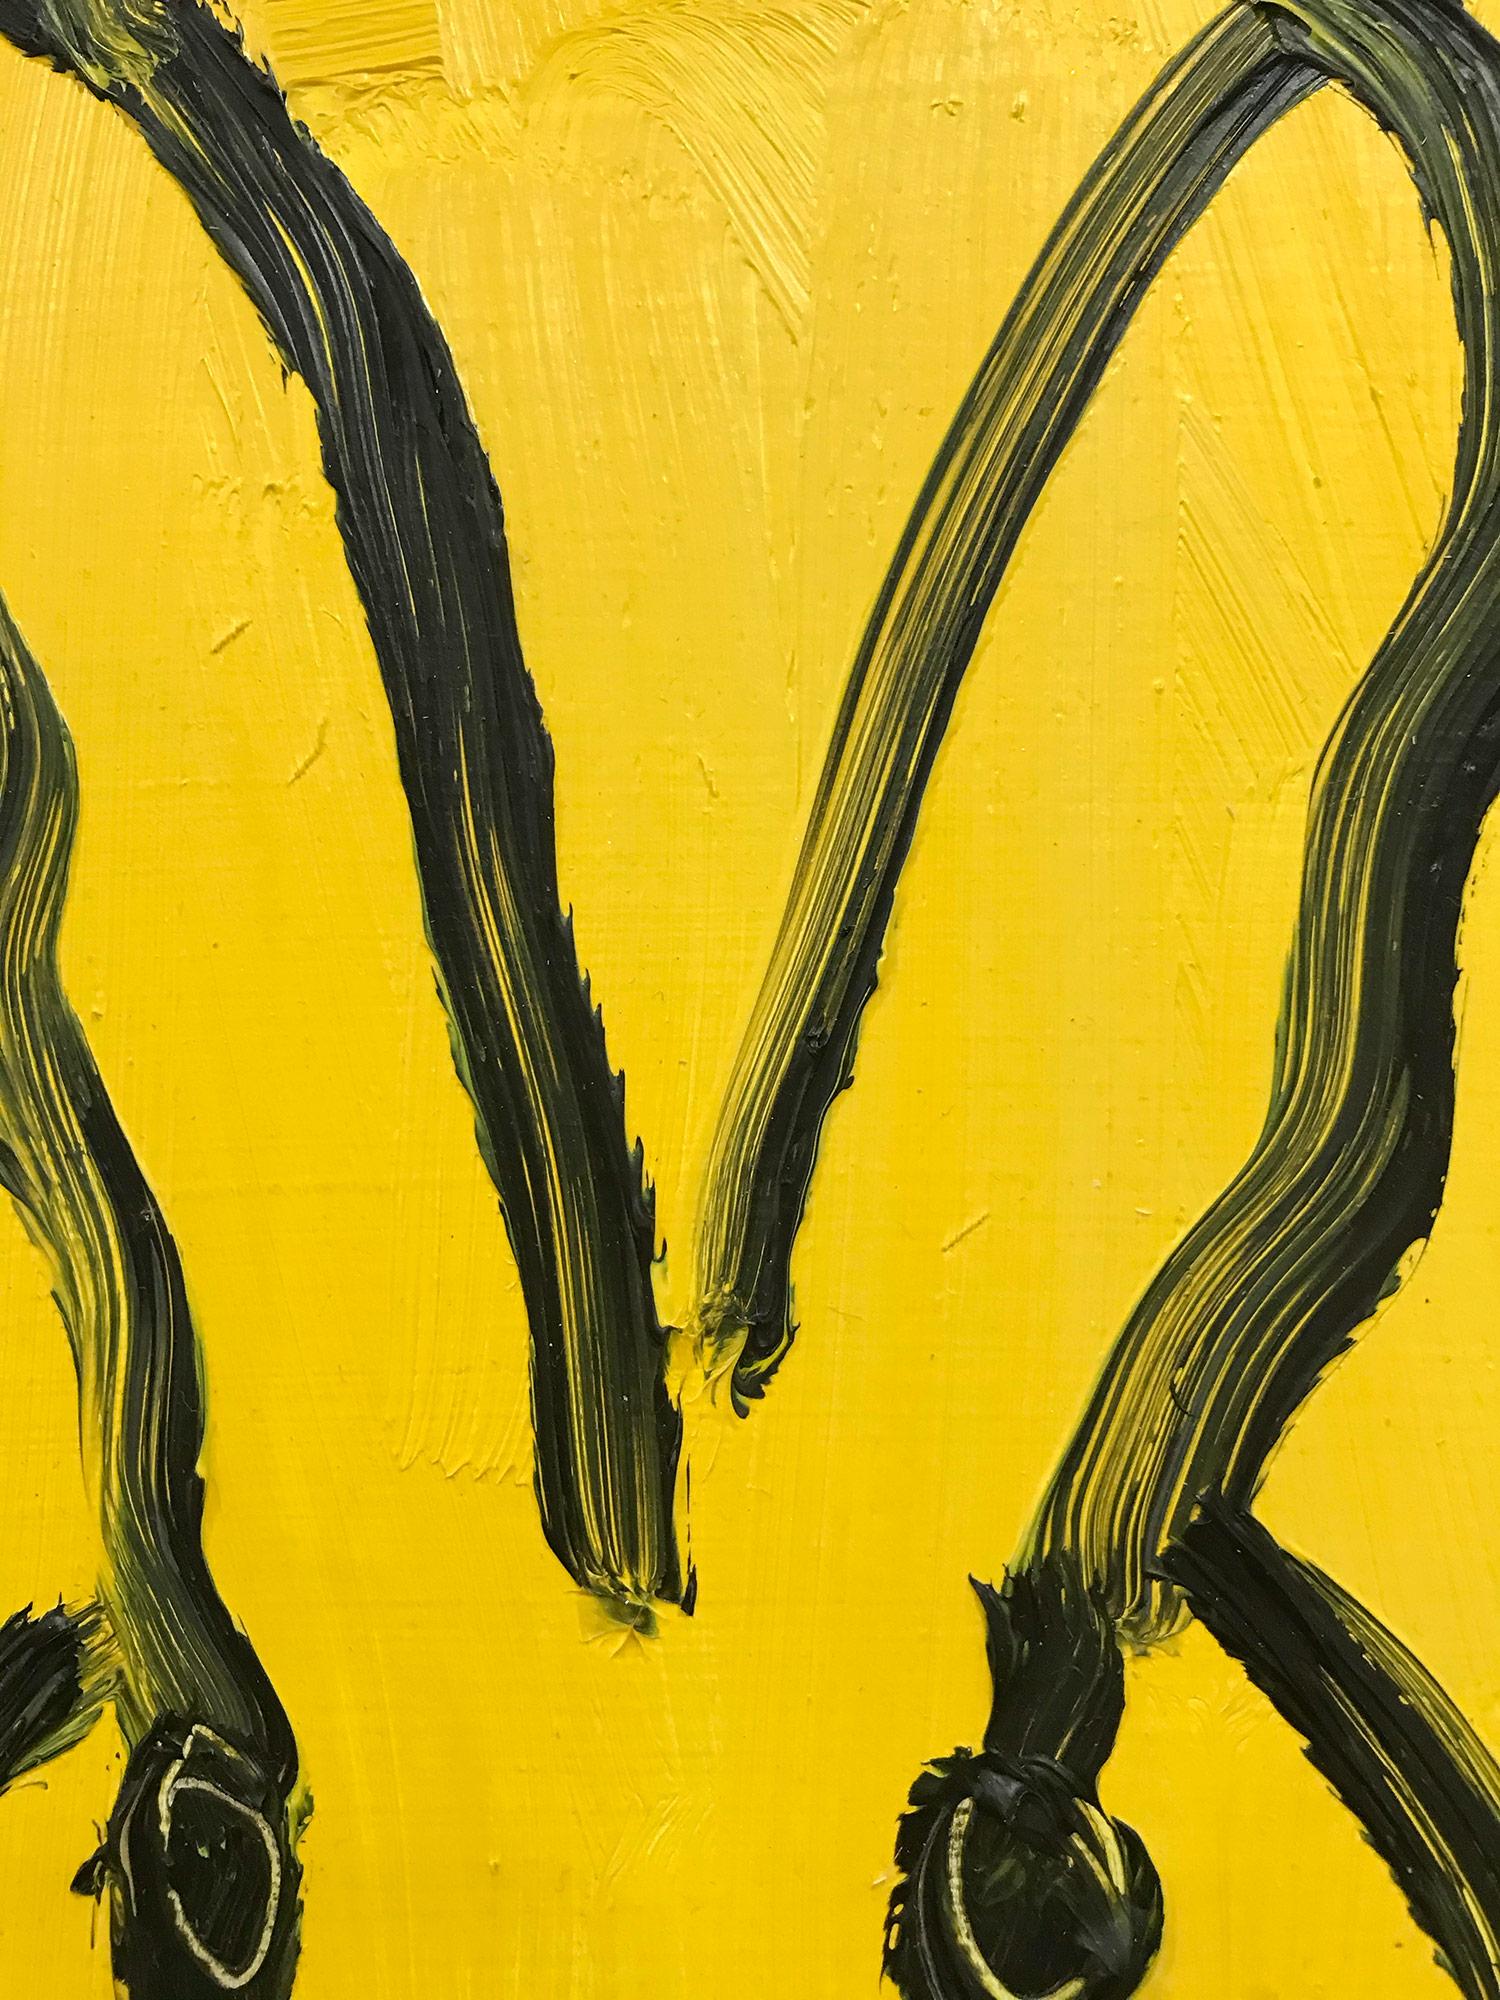 Jackie O - Yellow (Bunny on Royal Yellow) Oil Painting on Wood Panel 2